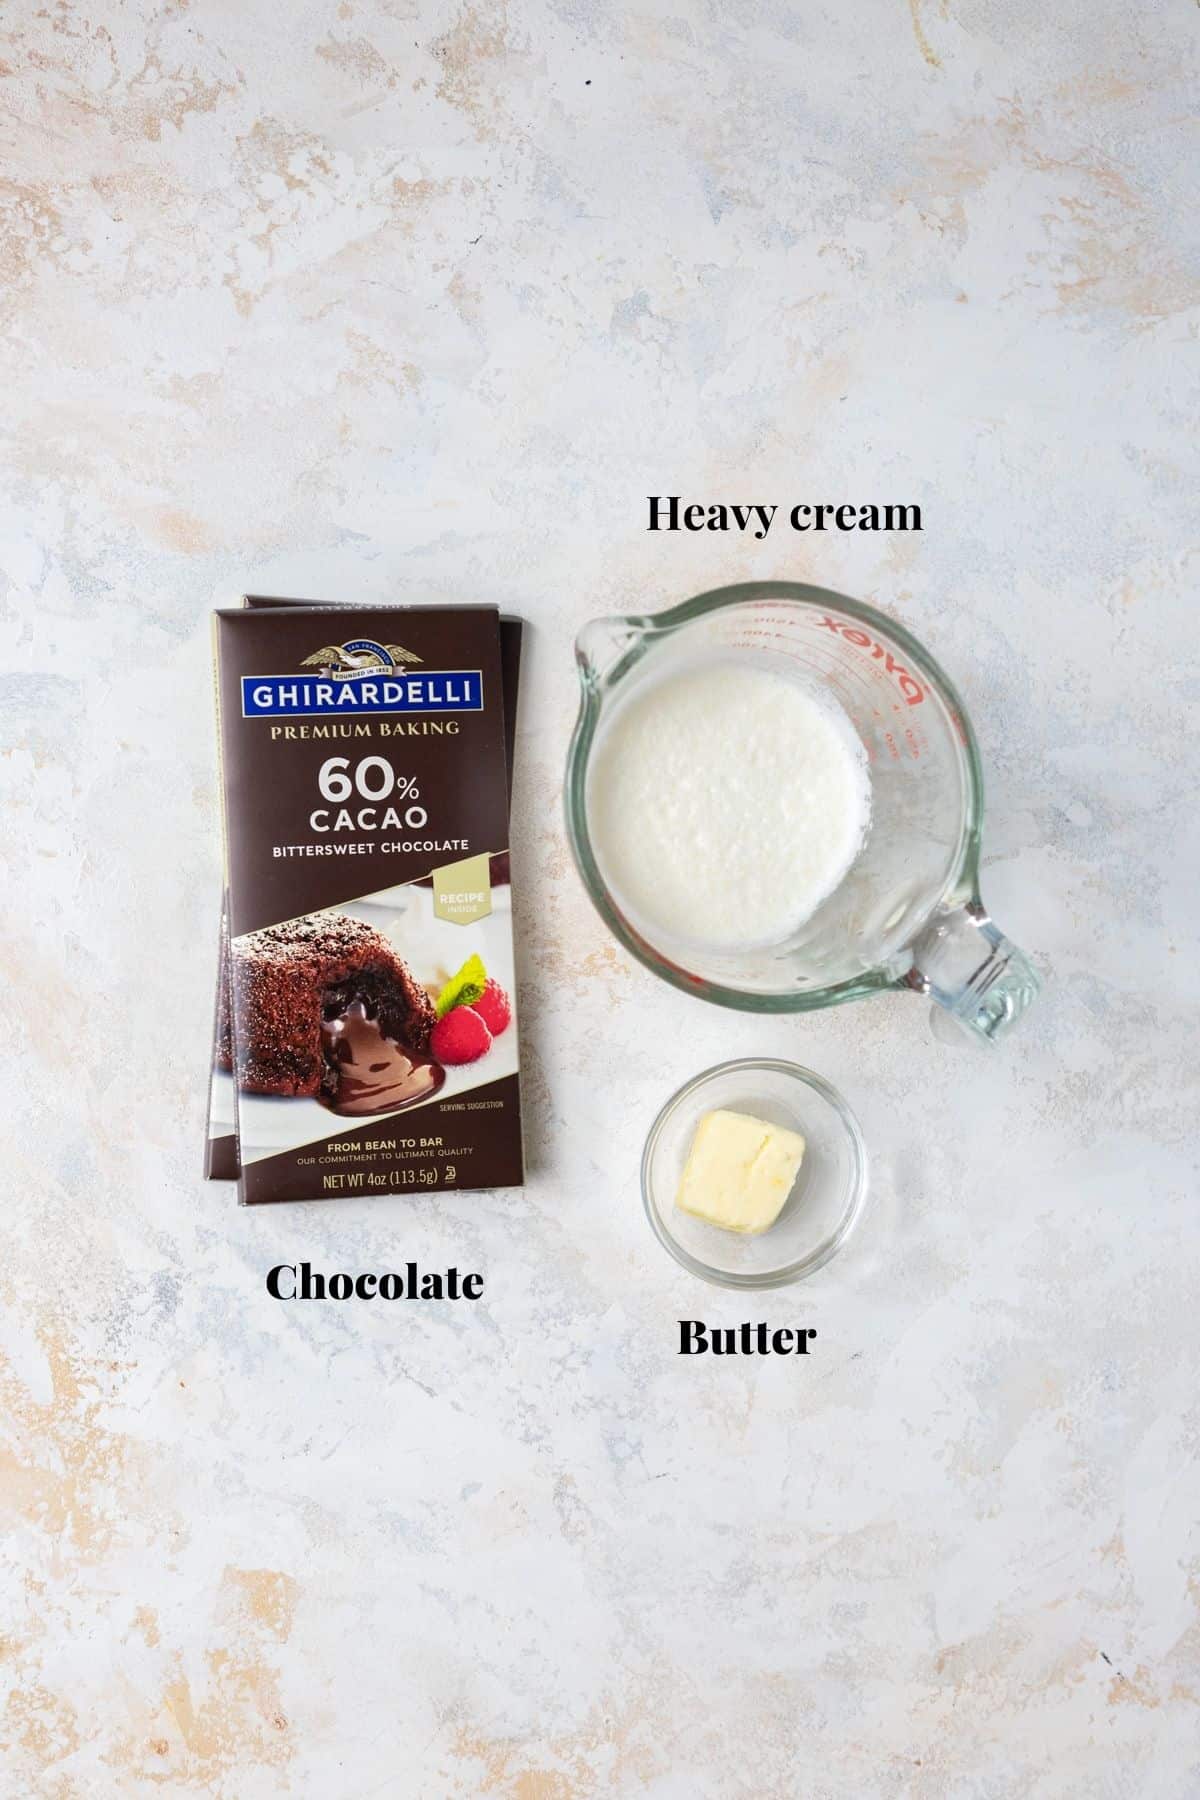 Ingredients to make chocolate ganache.